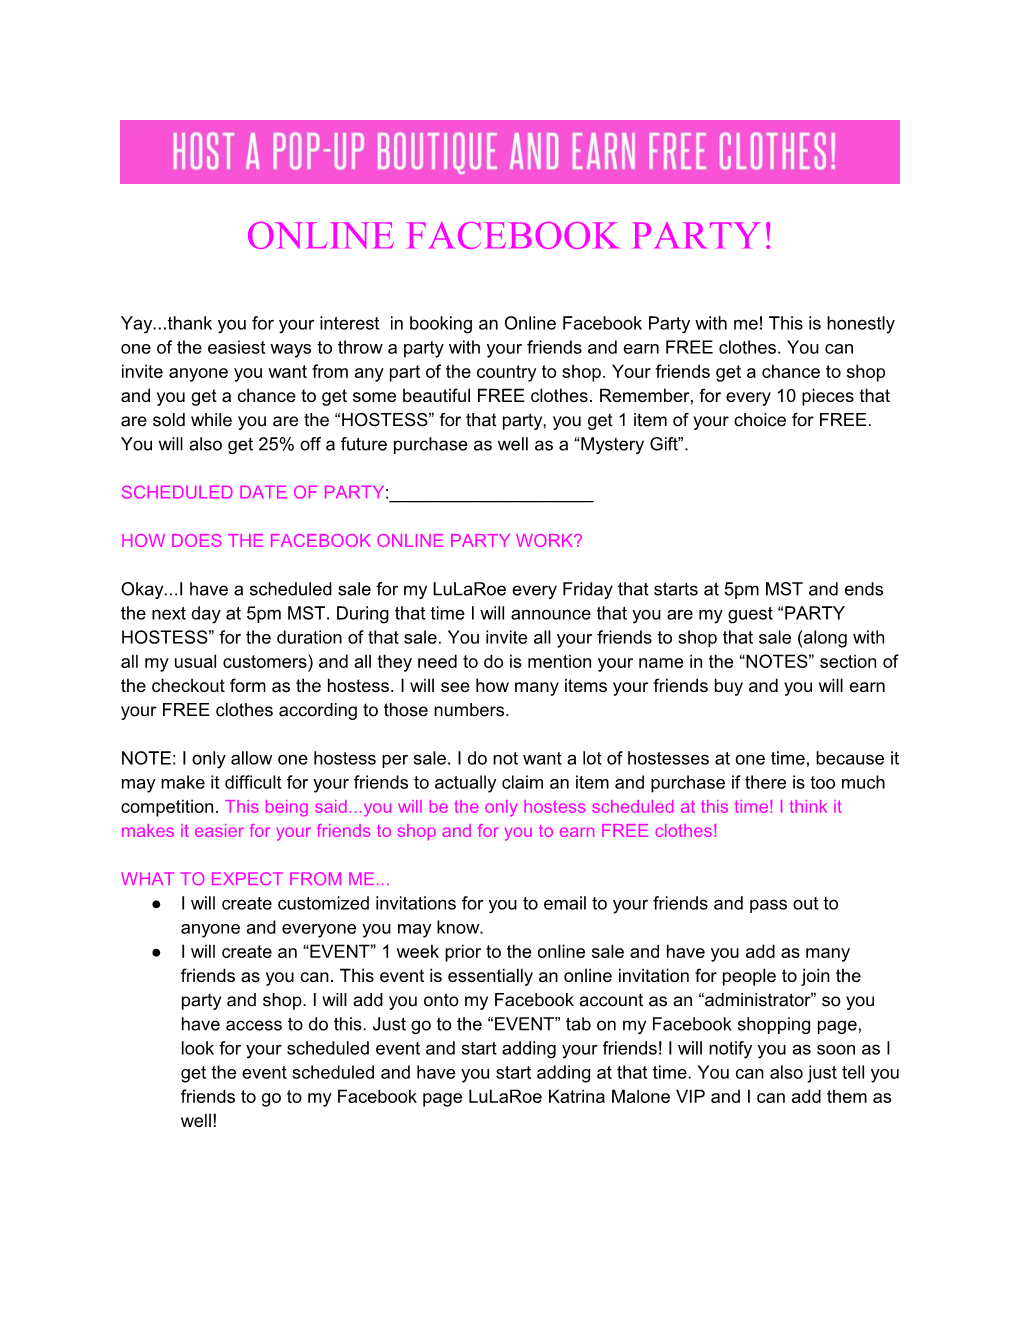 Online Facebook Party!